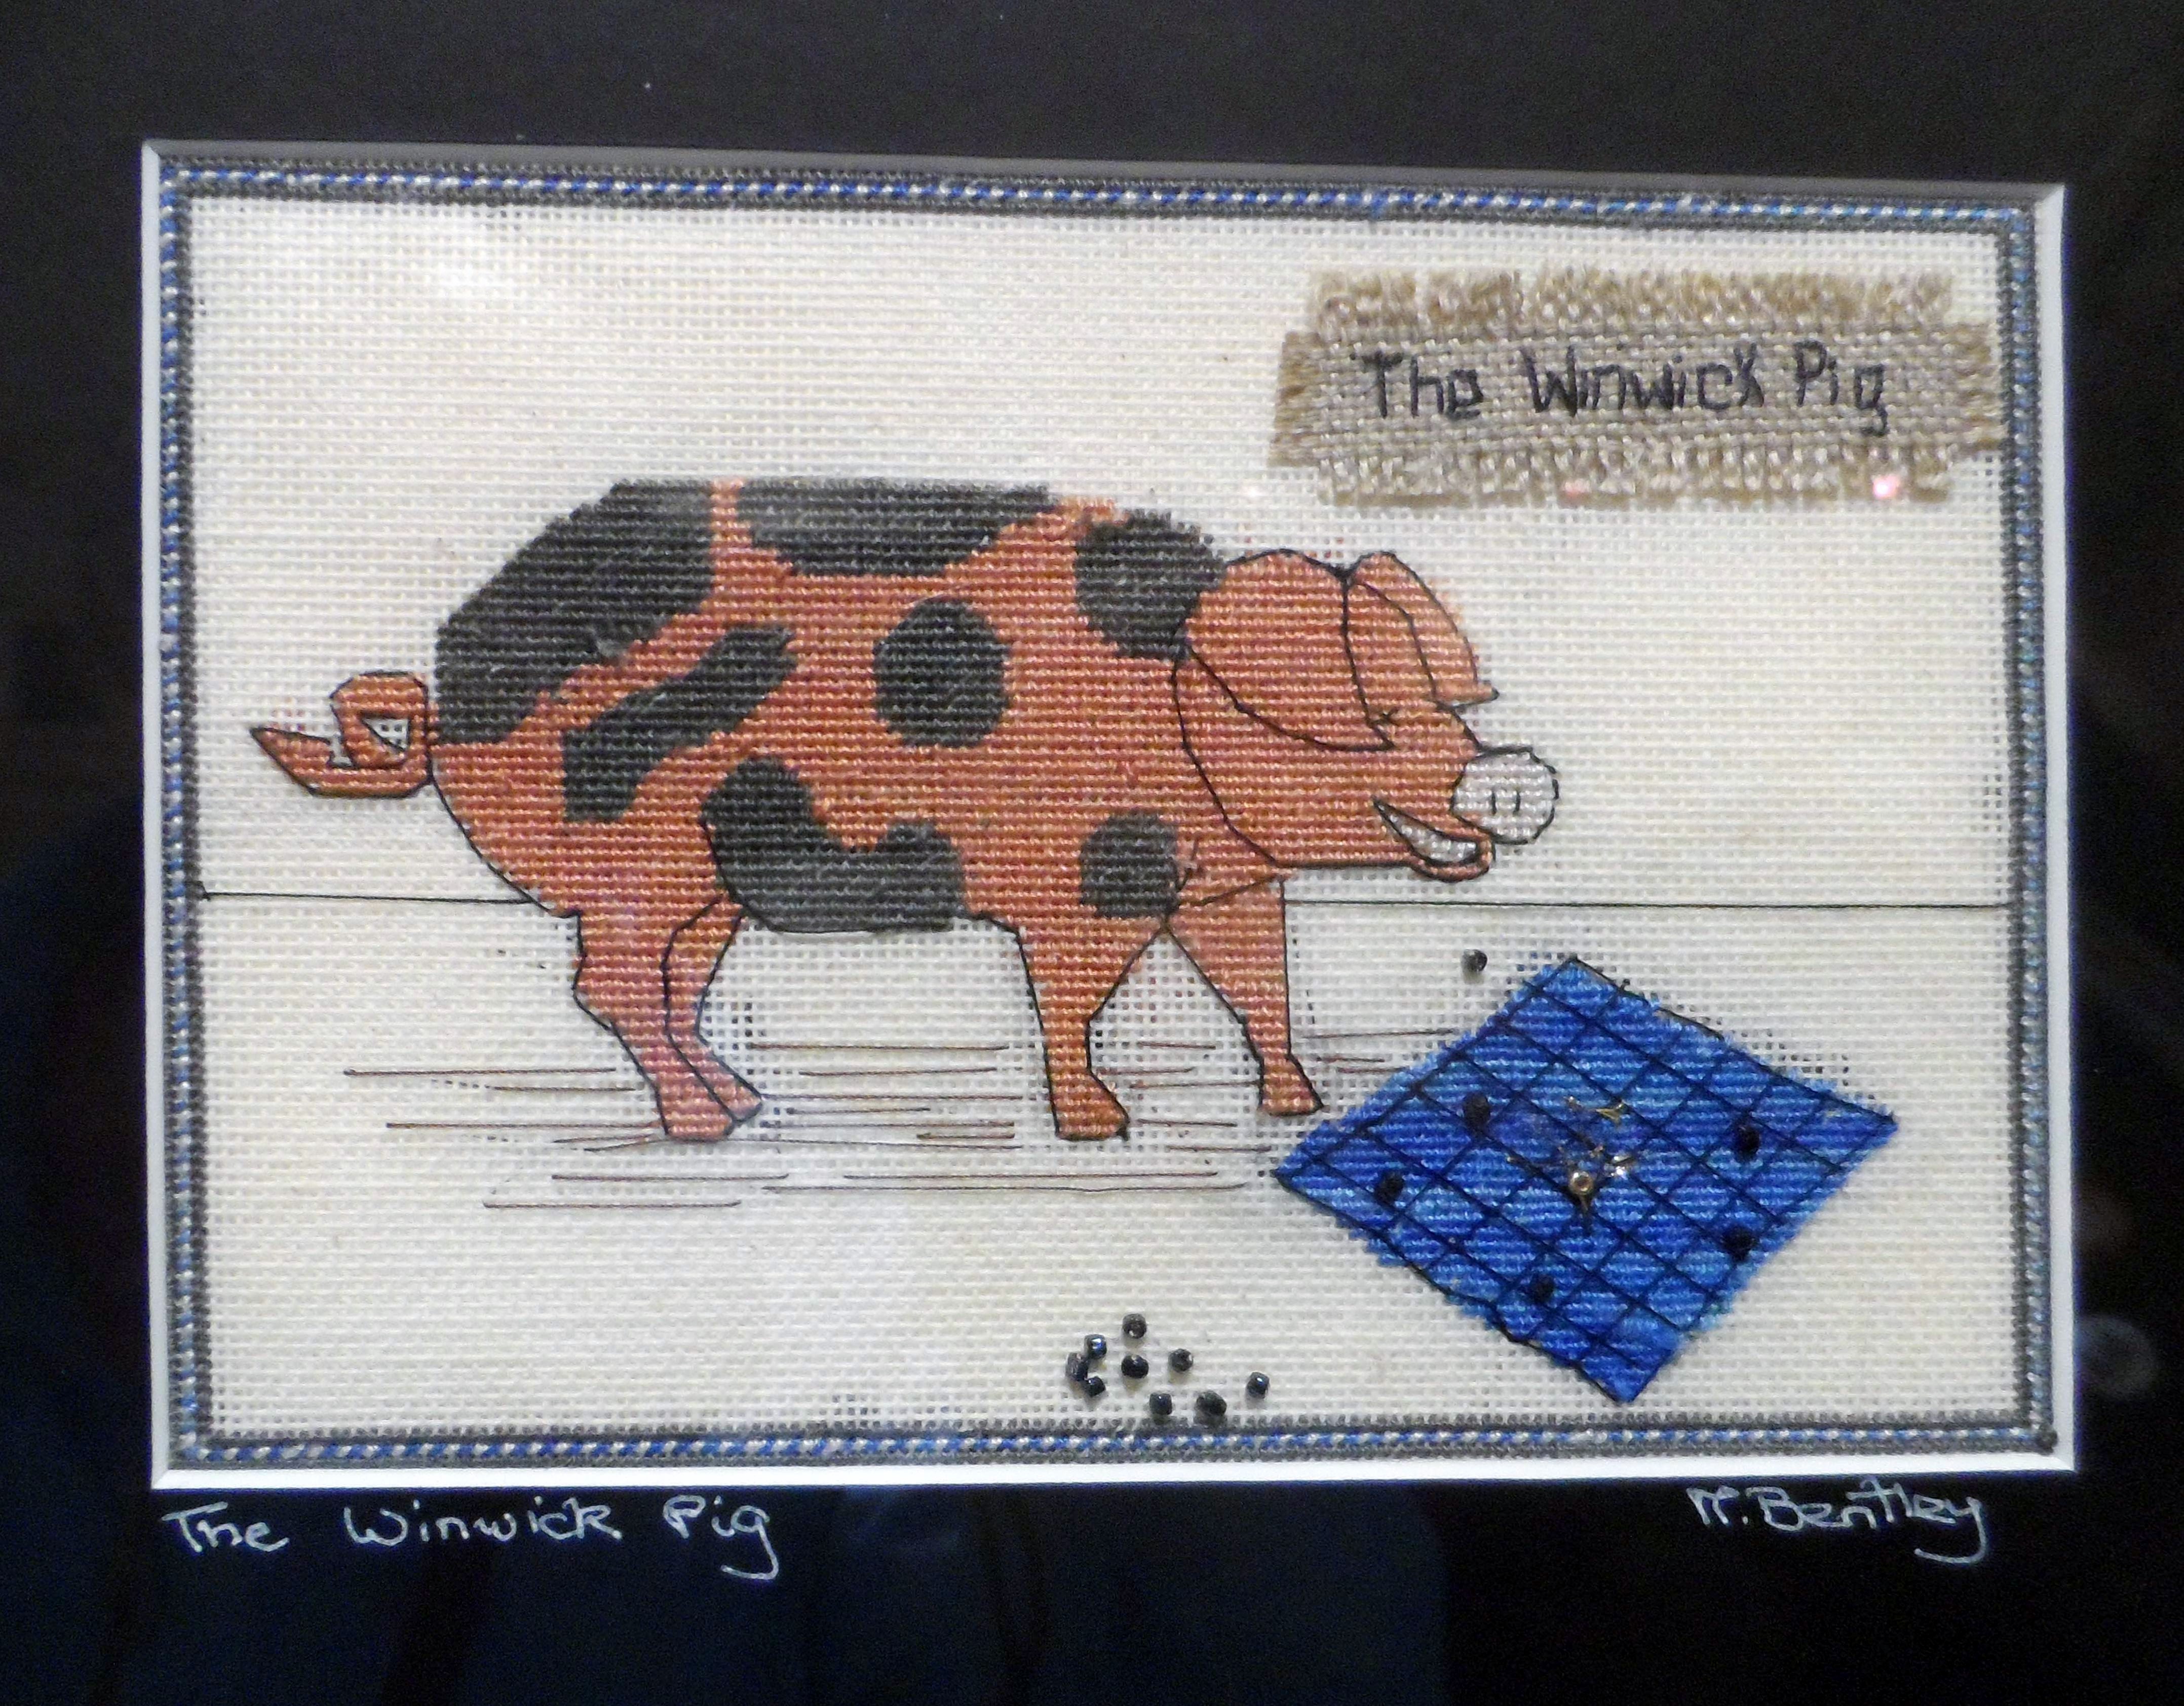 THE WINWICK PIG by Mavis Bentley, petit point on canvas